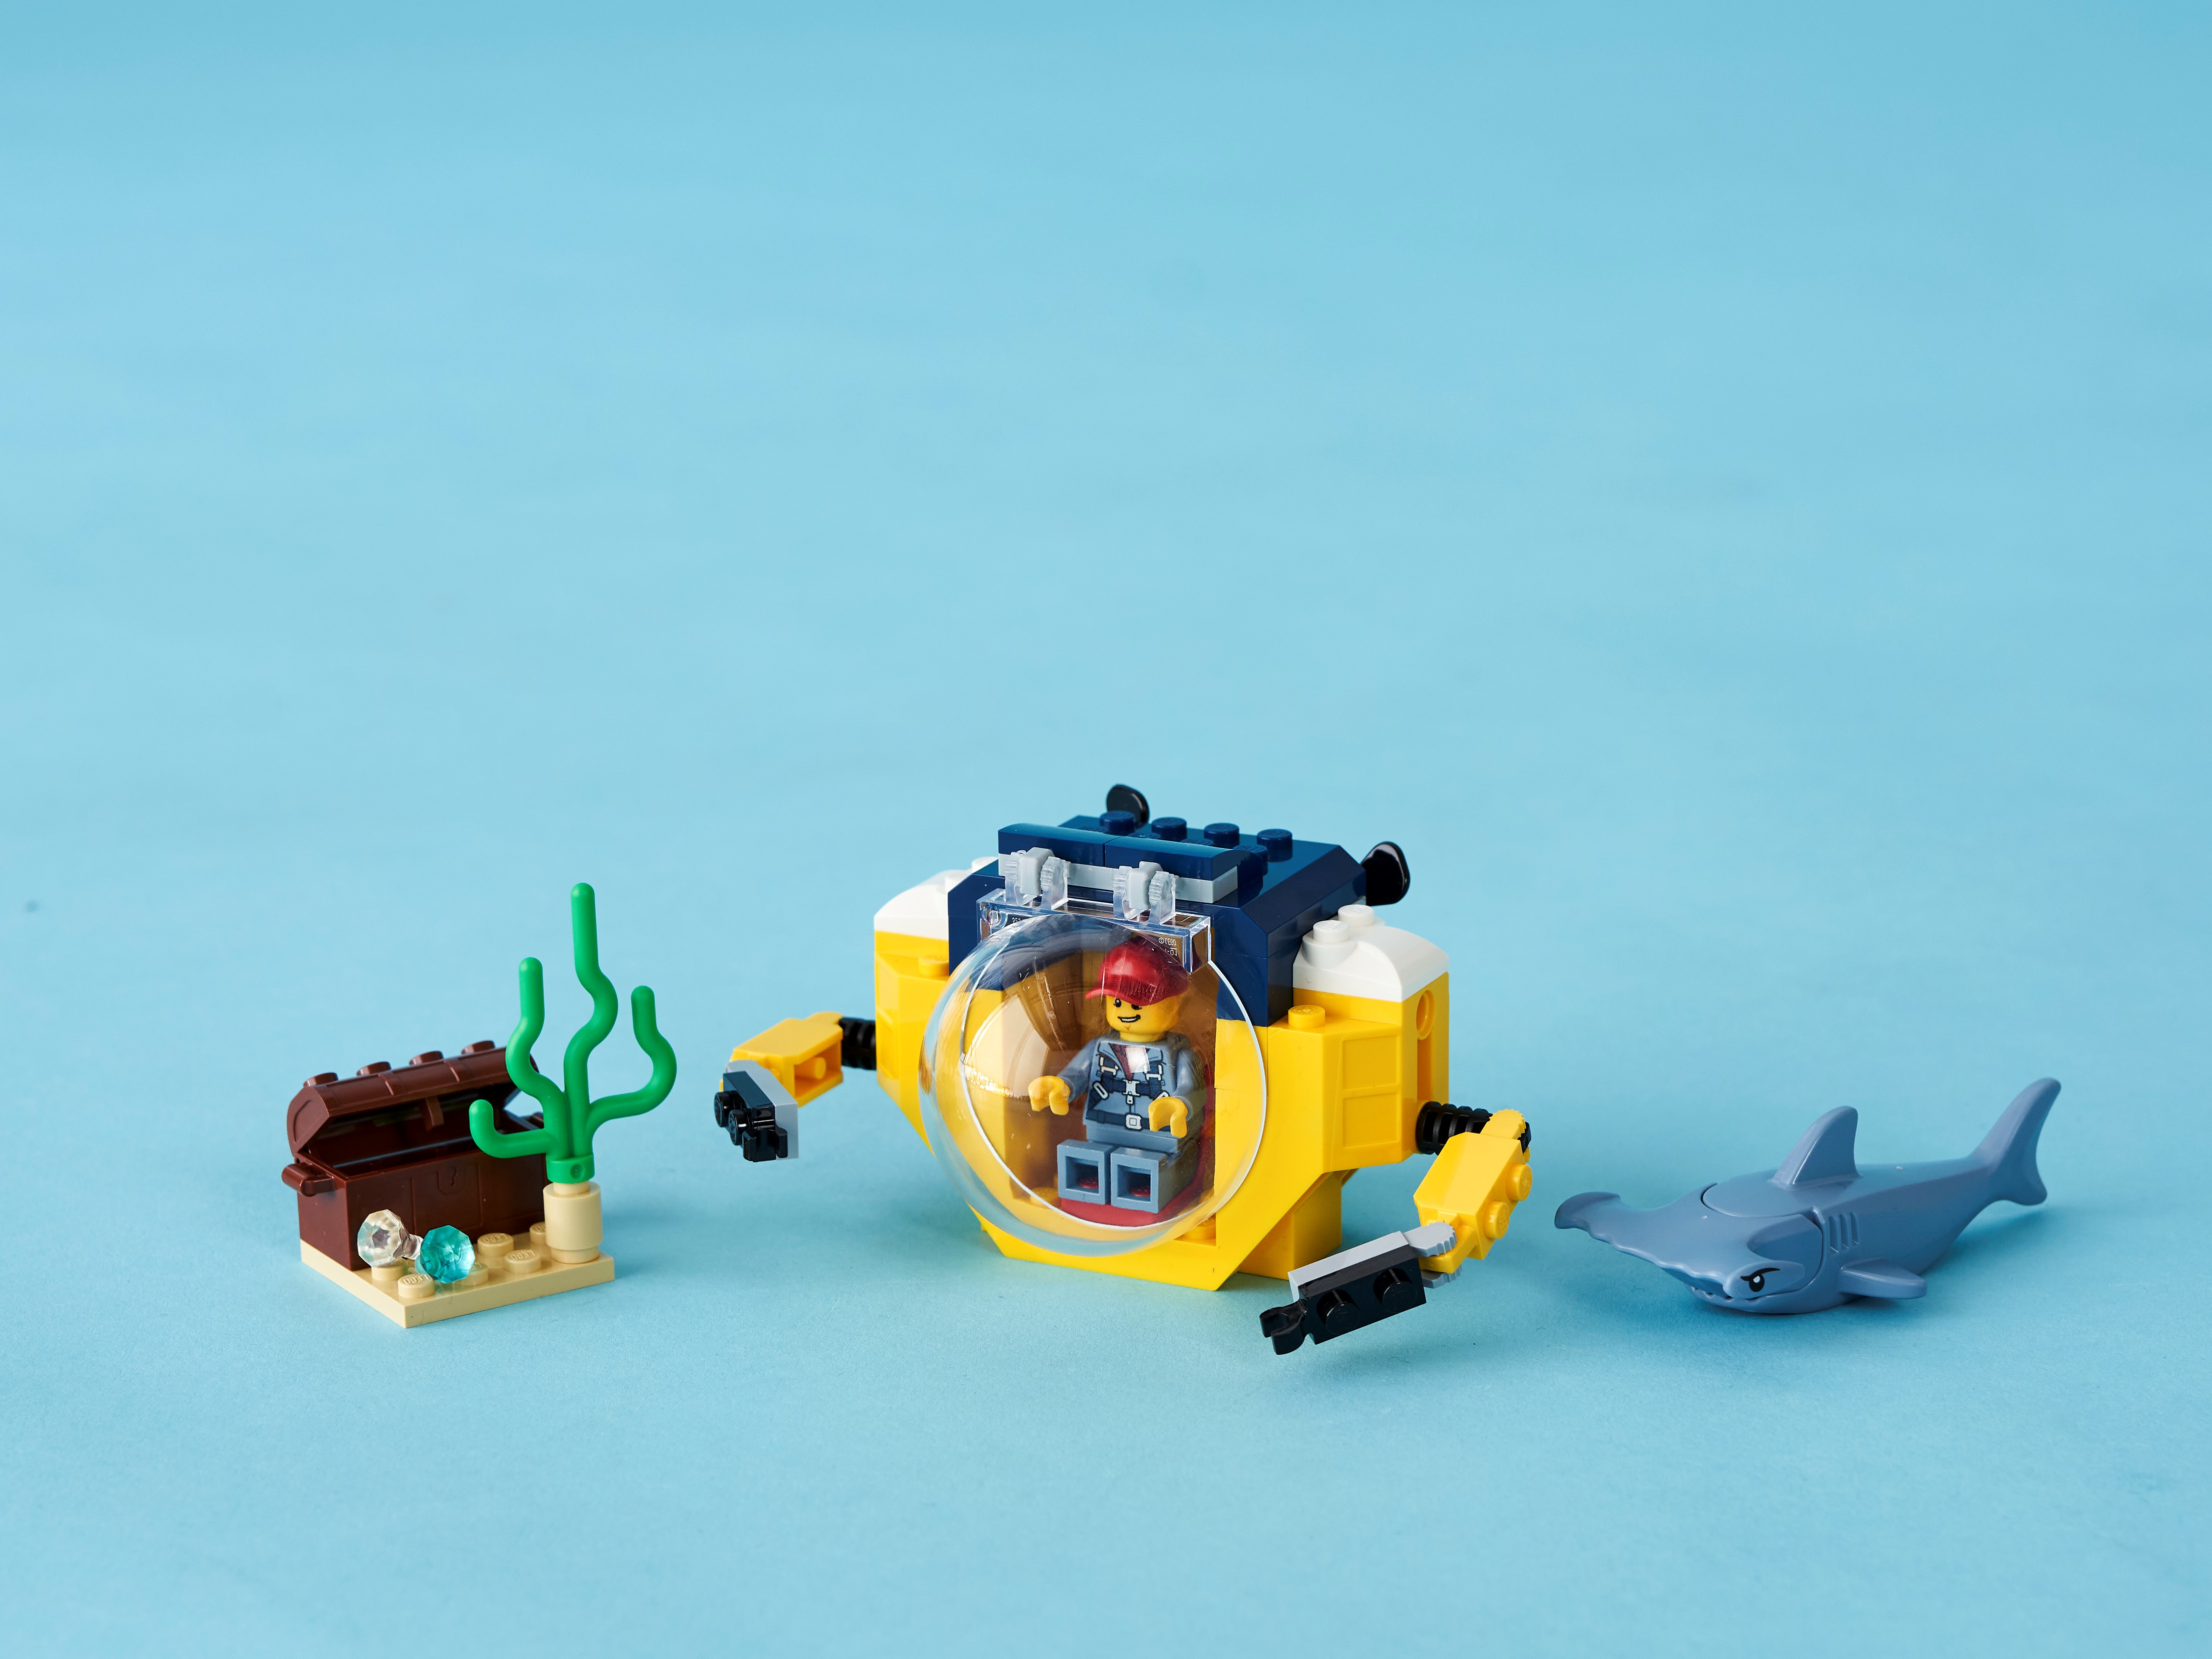 NISB Details about   Lego Town Deep Sea Explorers Set 60263 Ocean Mini-Submarine New In Box